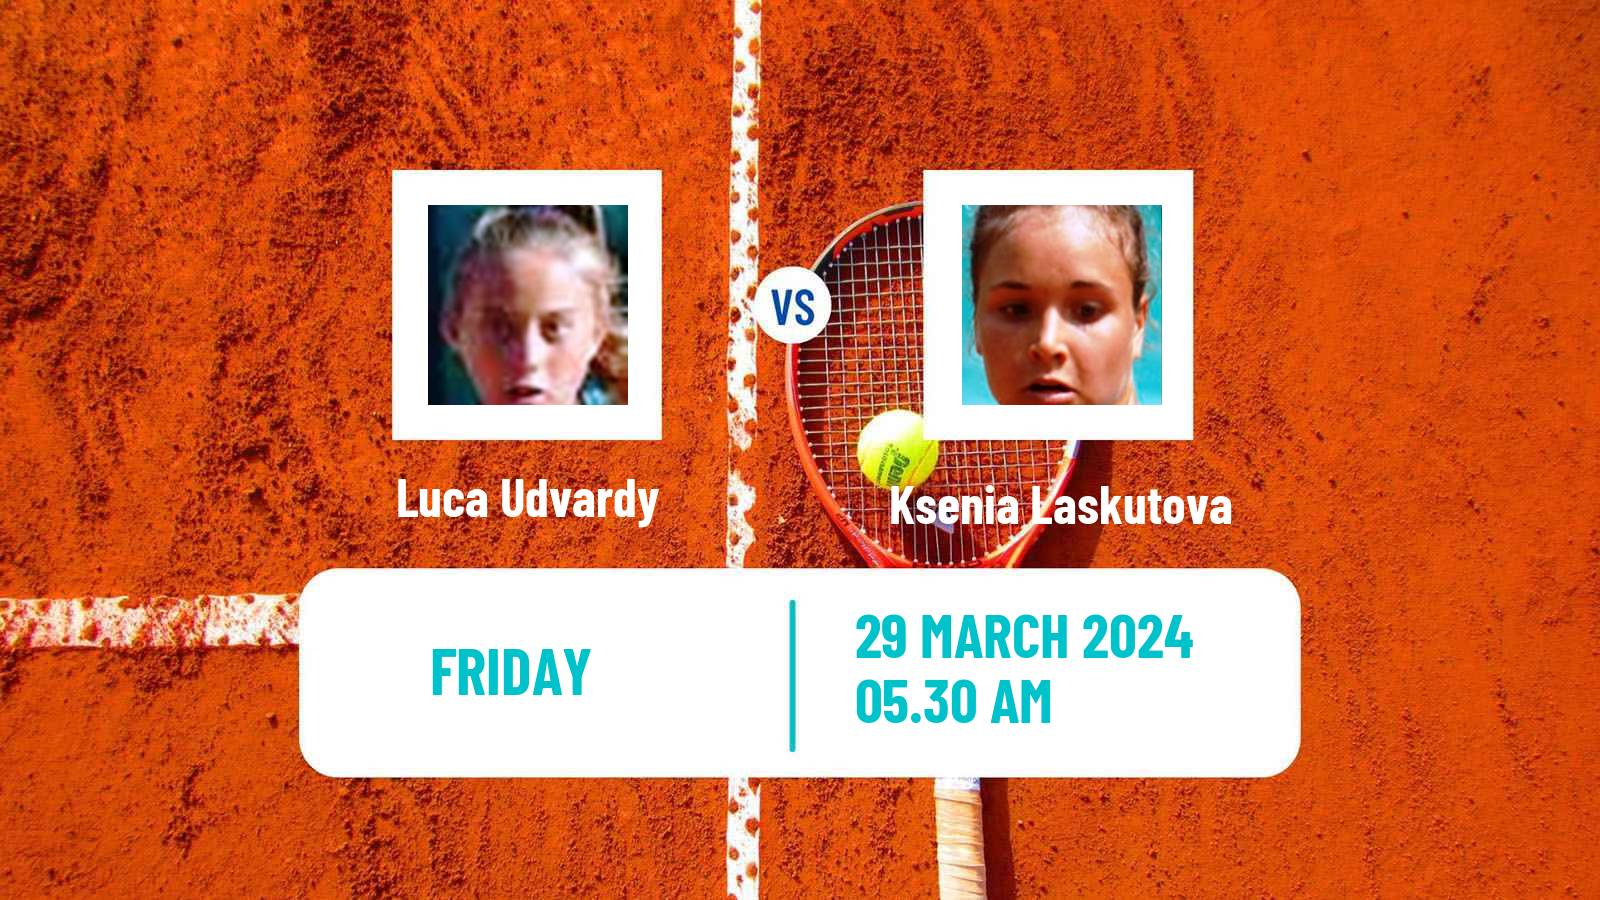 Tennis ITF W15 Antalya 7 Women Luca Udvardy - Ksenia Laskutova